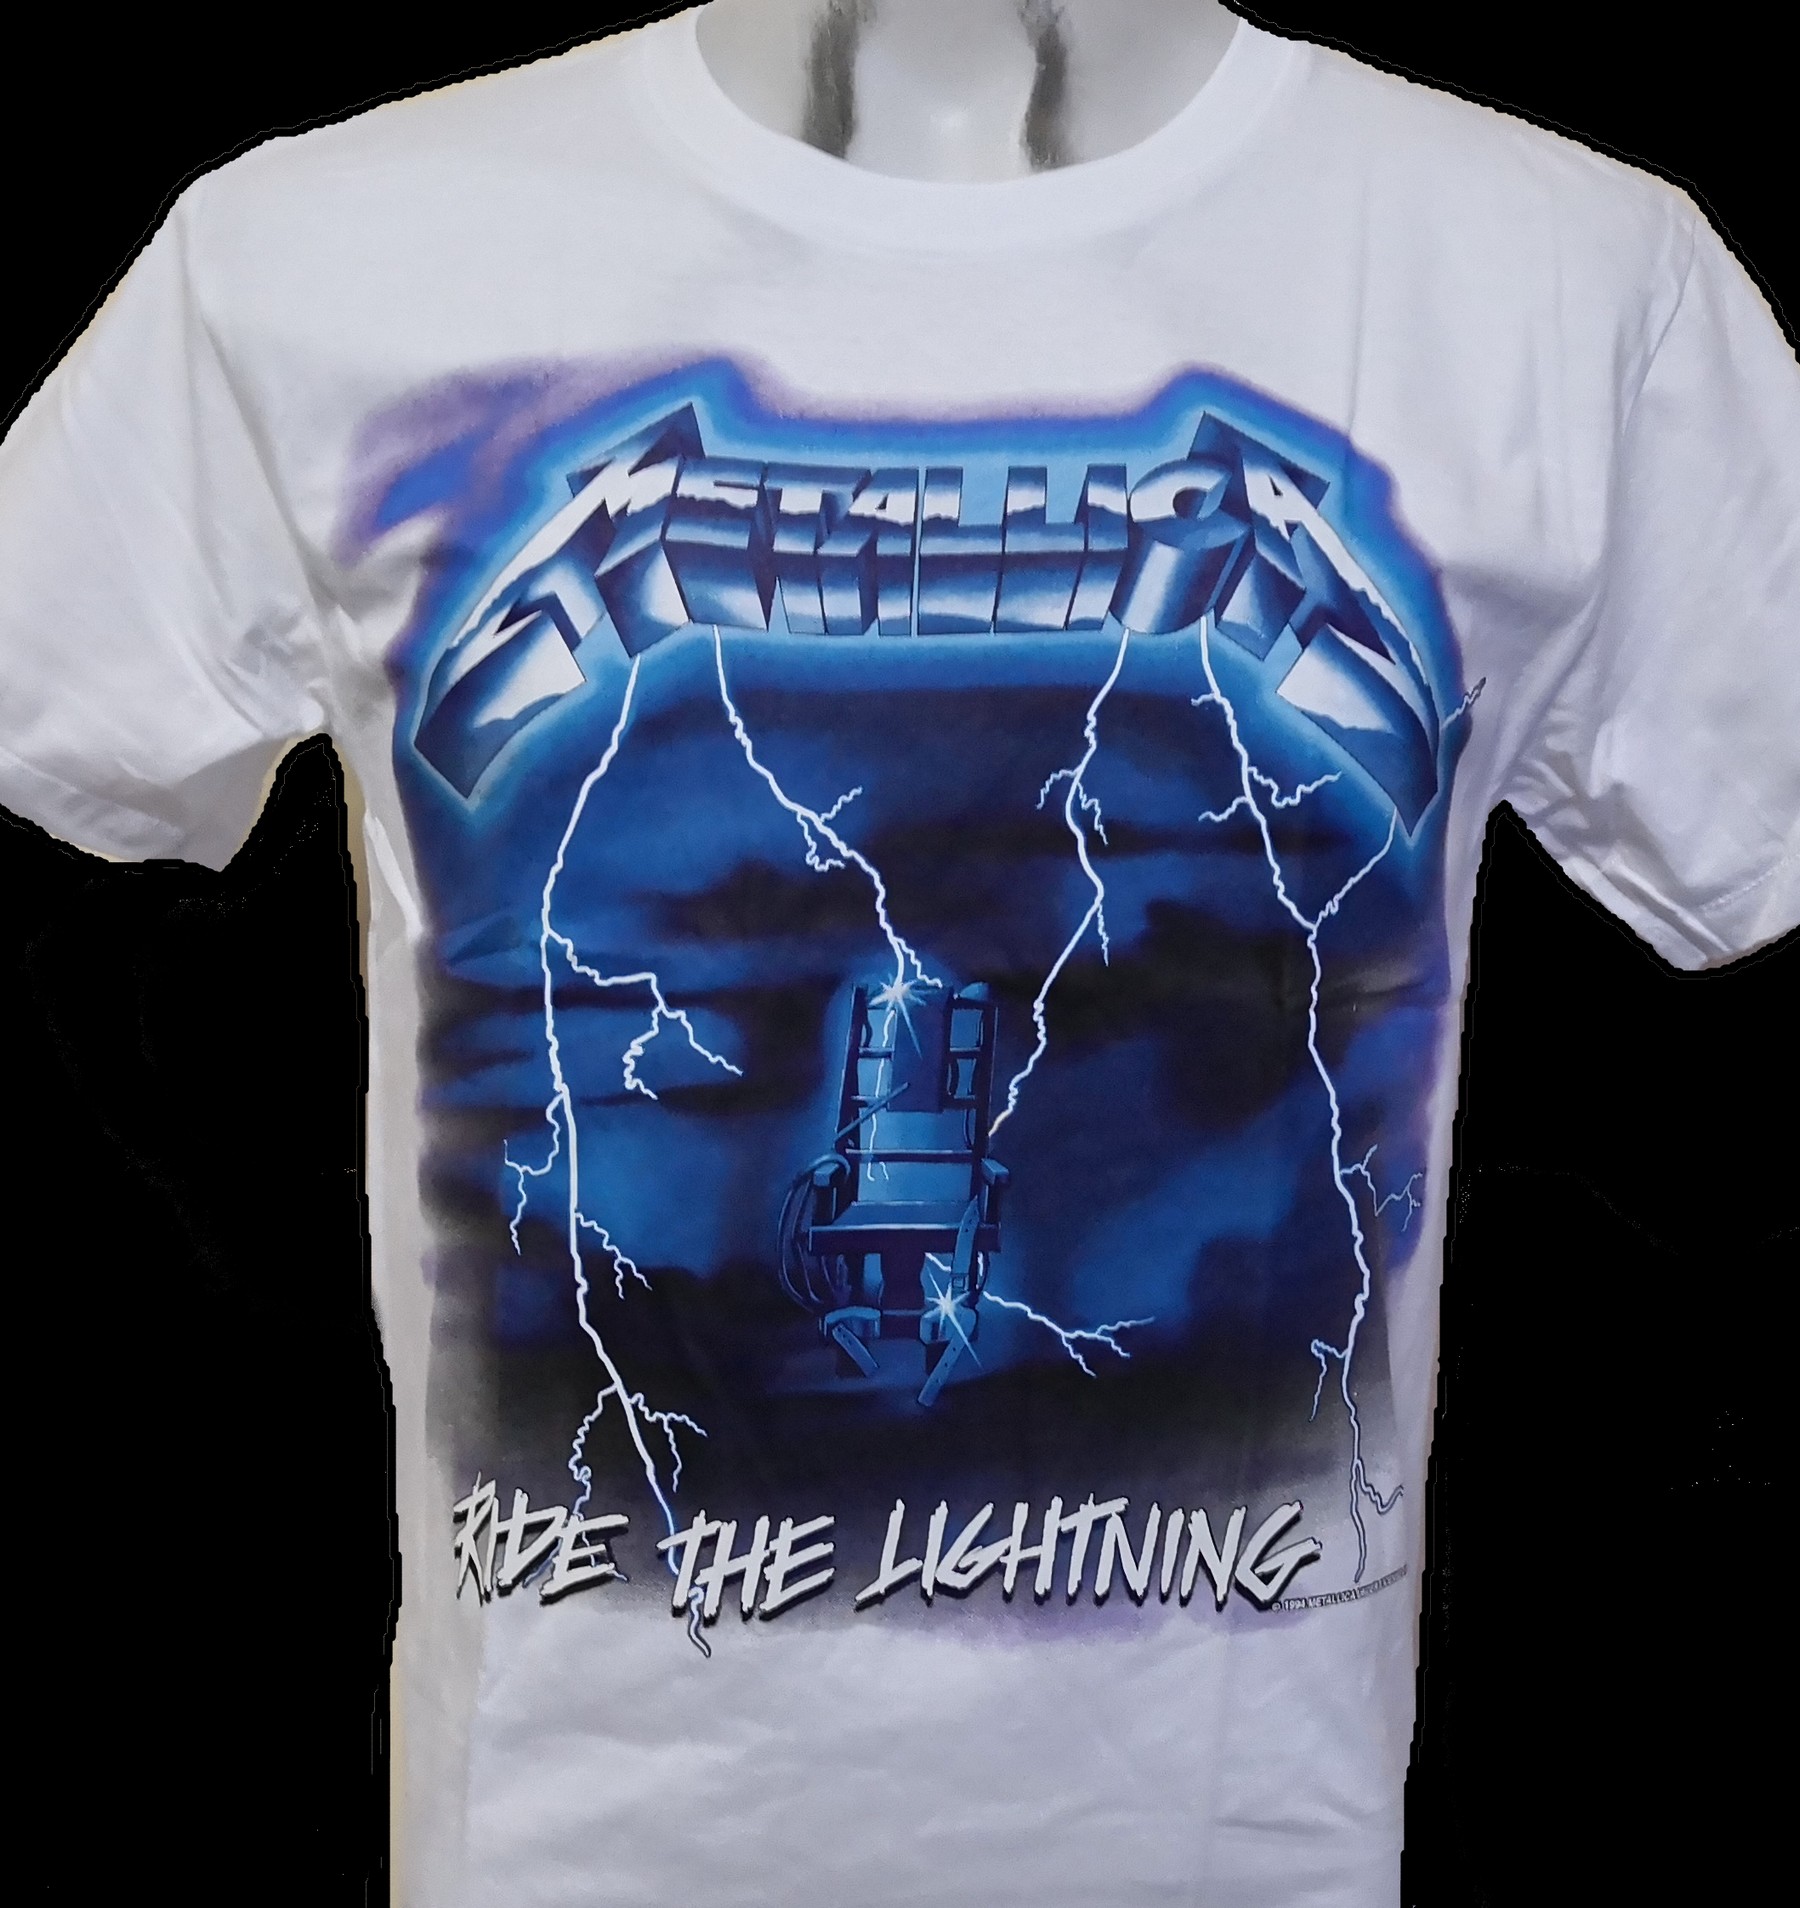 Metallica t-shirt Ride Lightning size L RoxxBKK